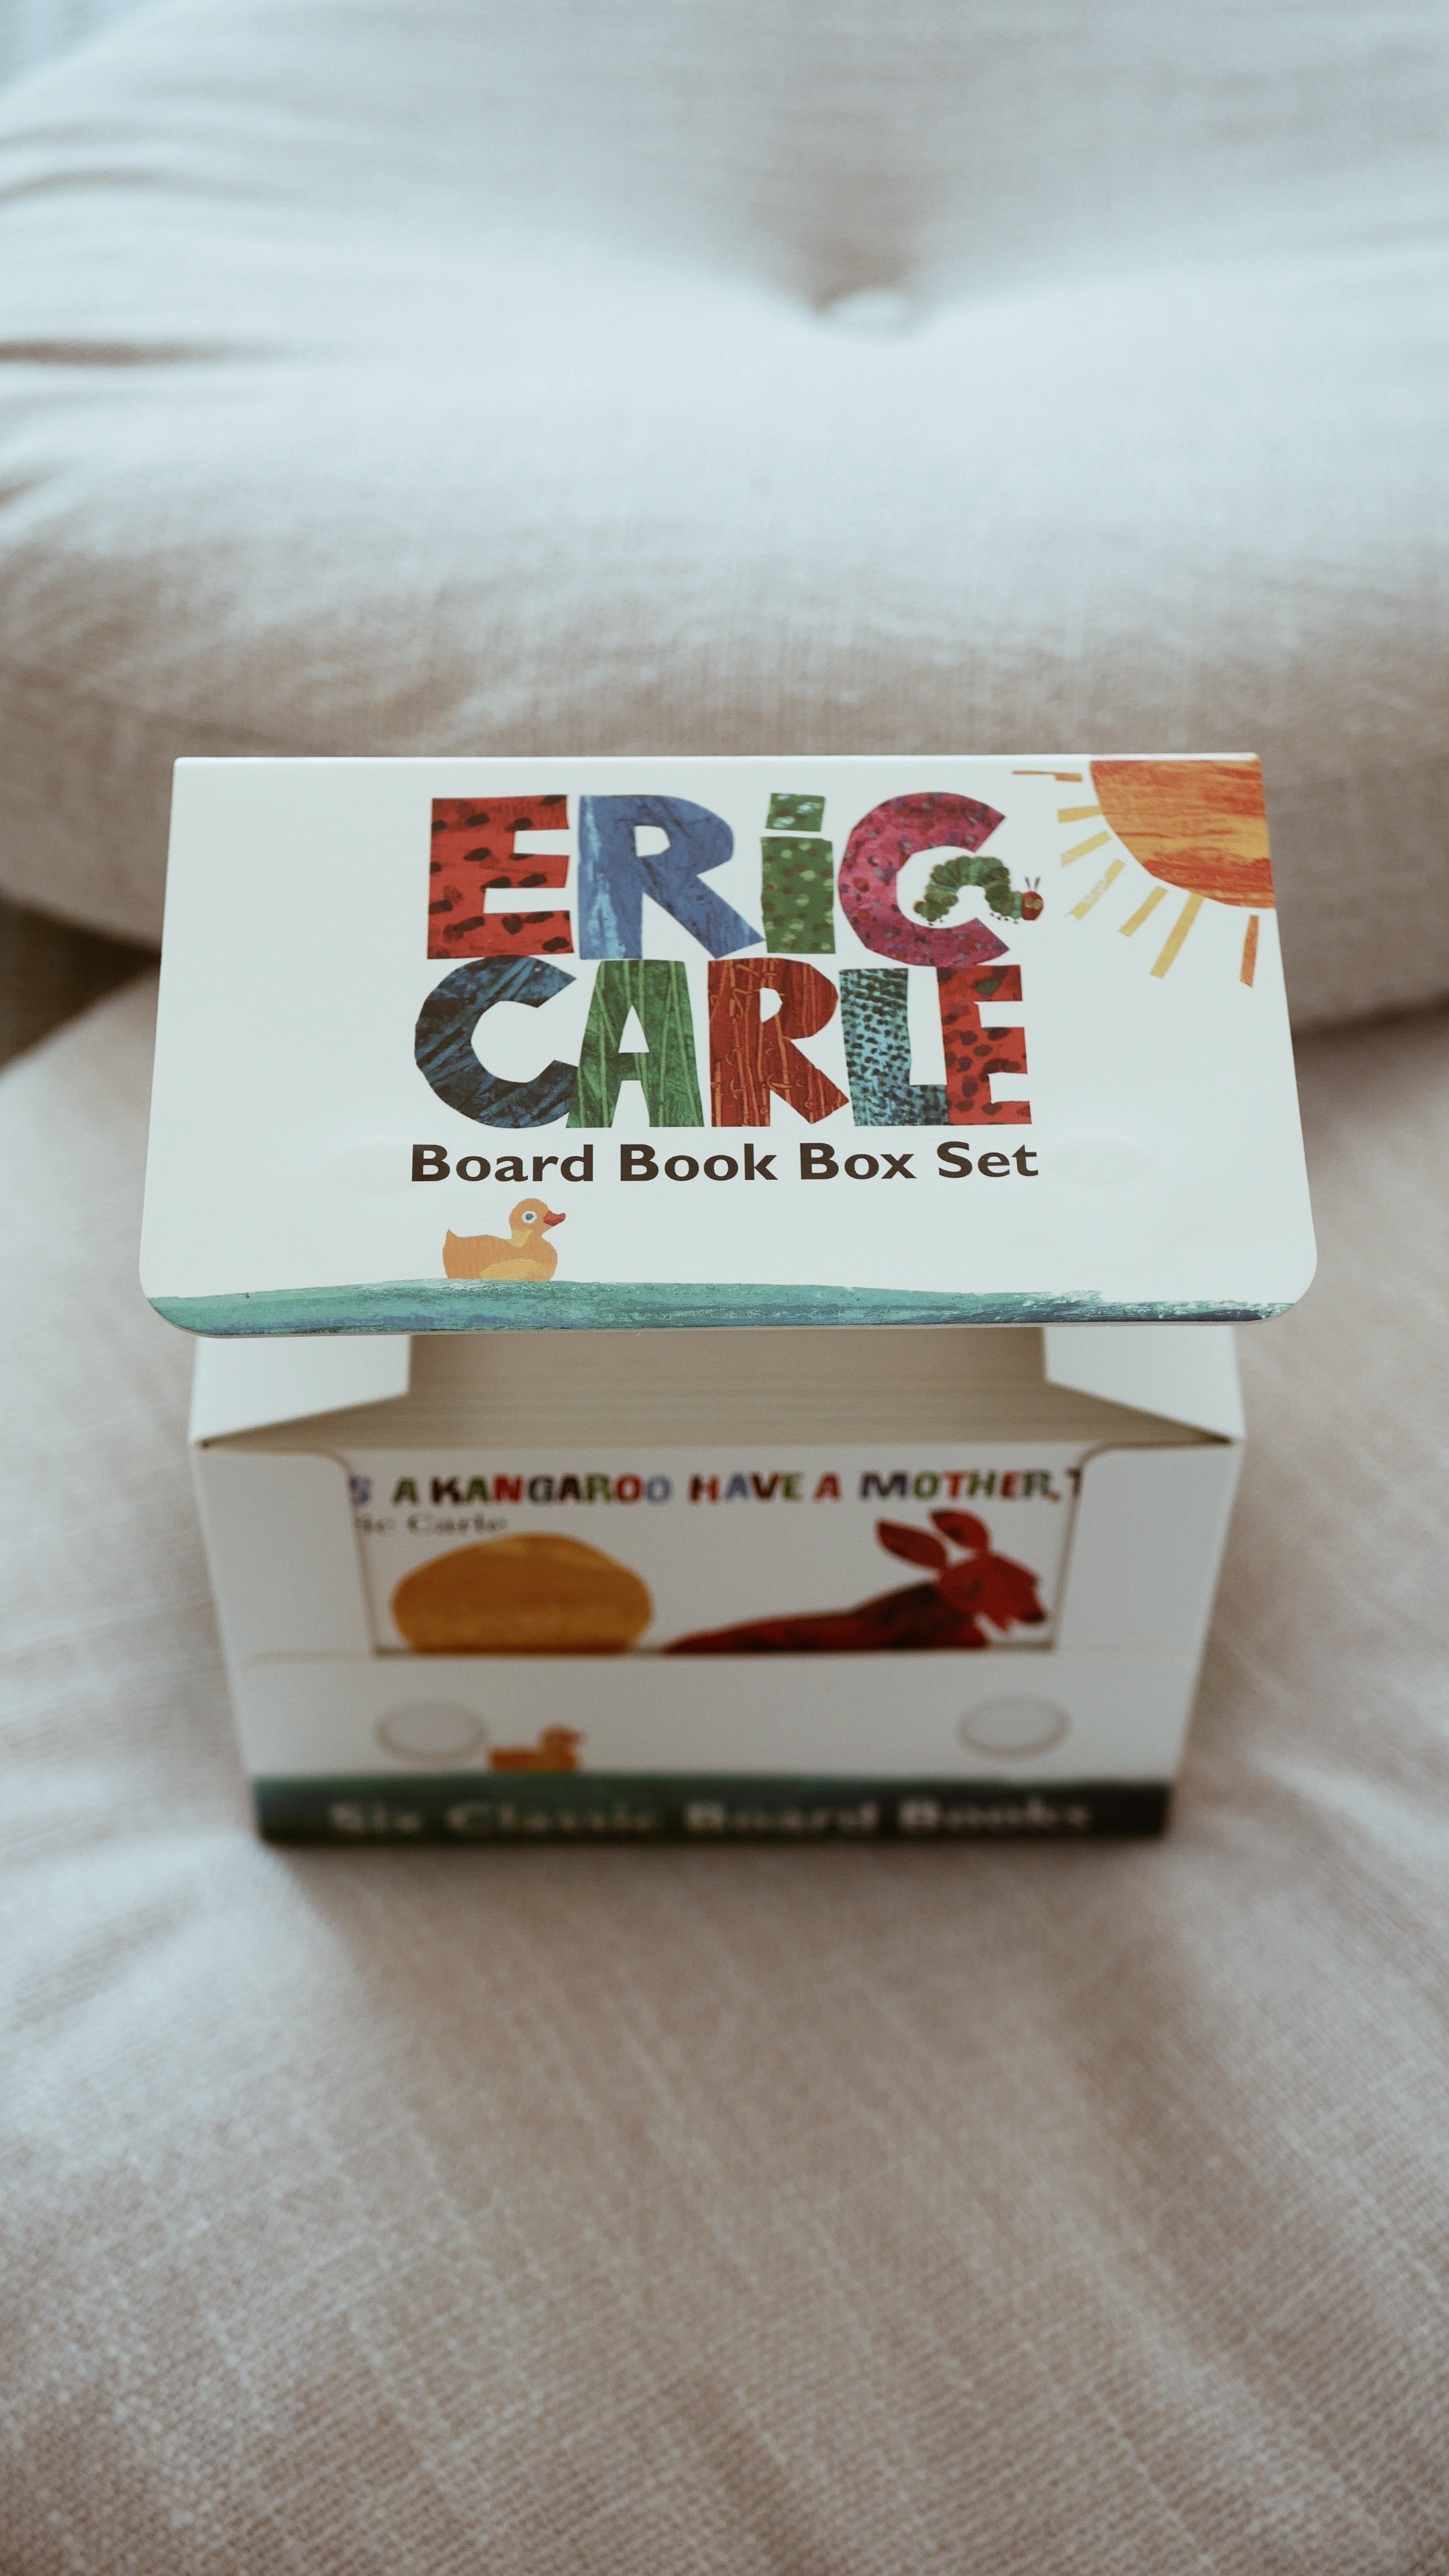 Eric Carle Six Classic Board Books Box Set